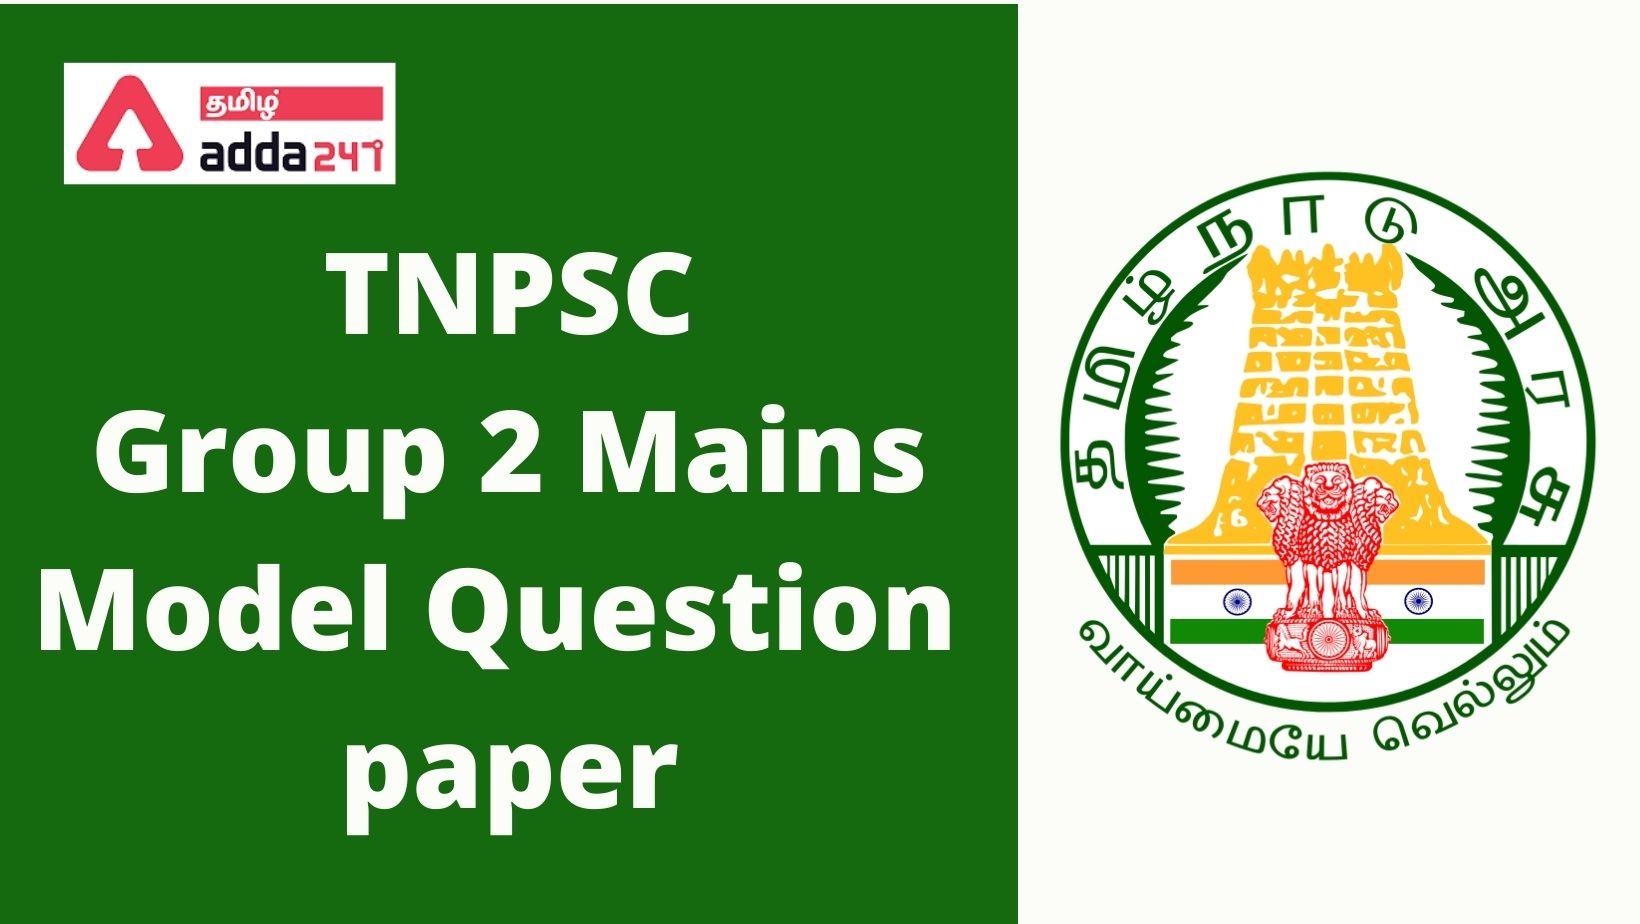 TNPSC Group 2 Mains Model Question Paper | TNPSC  குரூப் 2 முதன்மை தேர்வு மாதிரி வினாத்தாள்_30.1